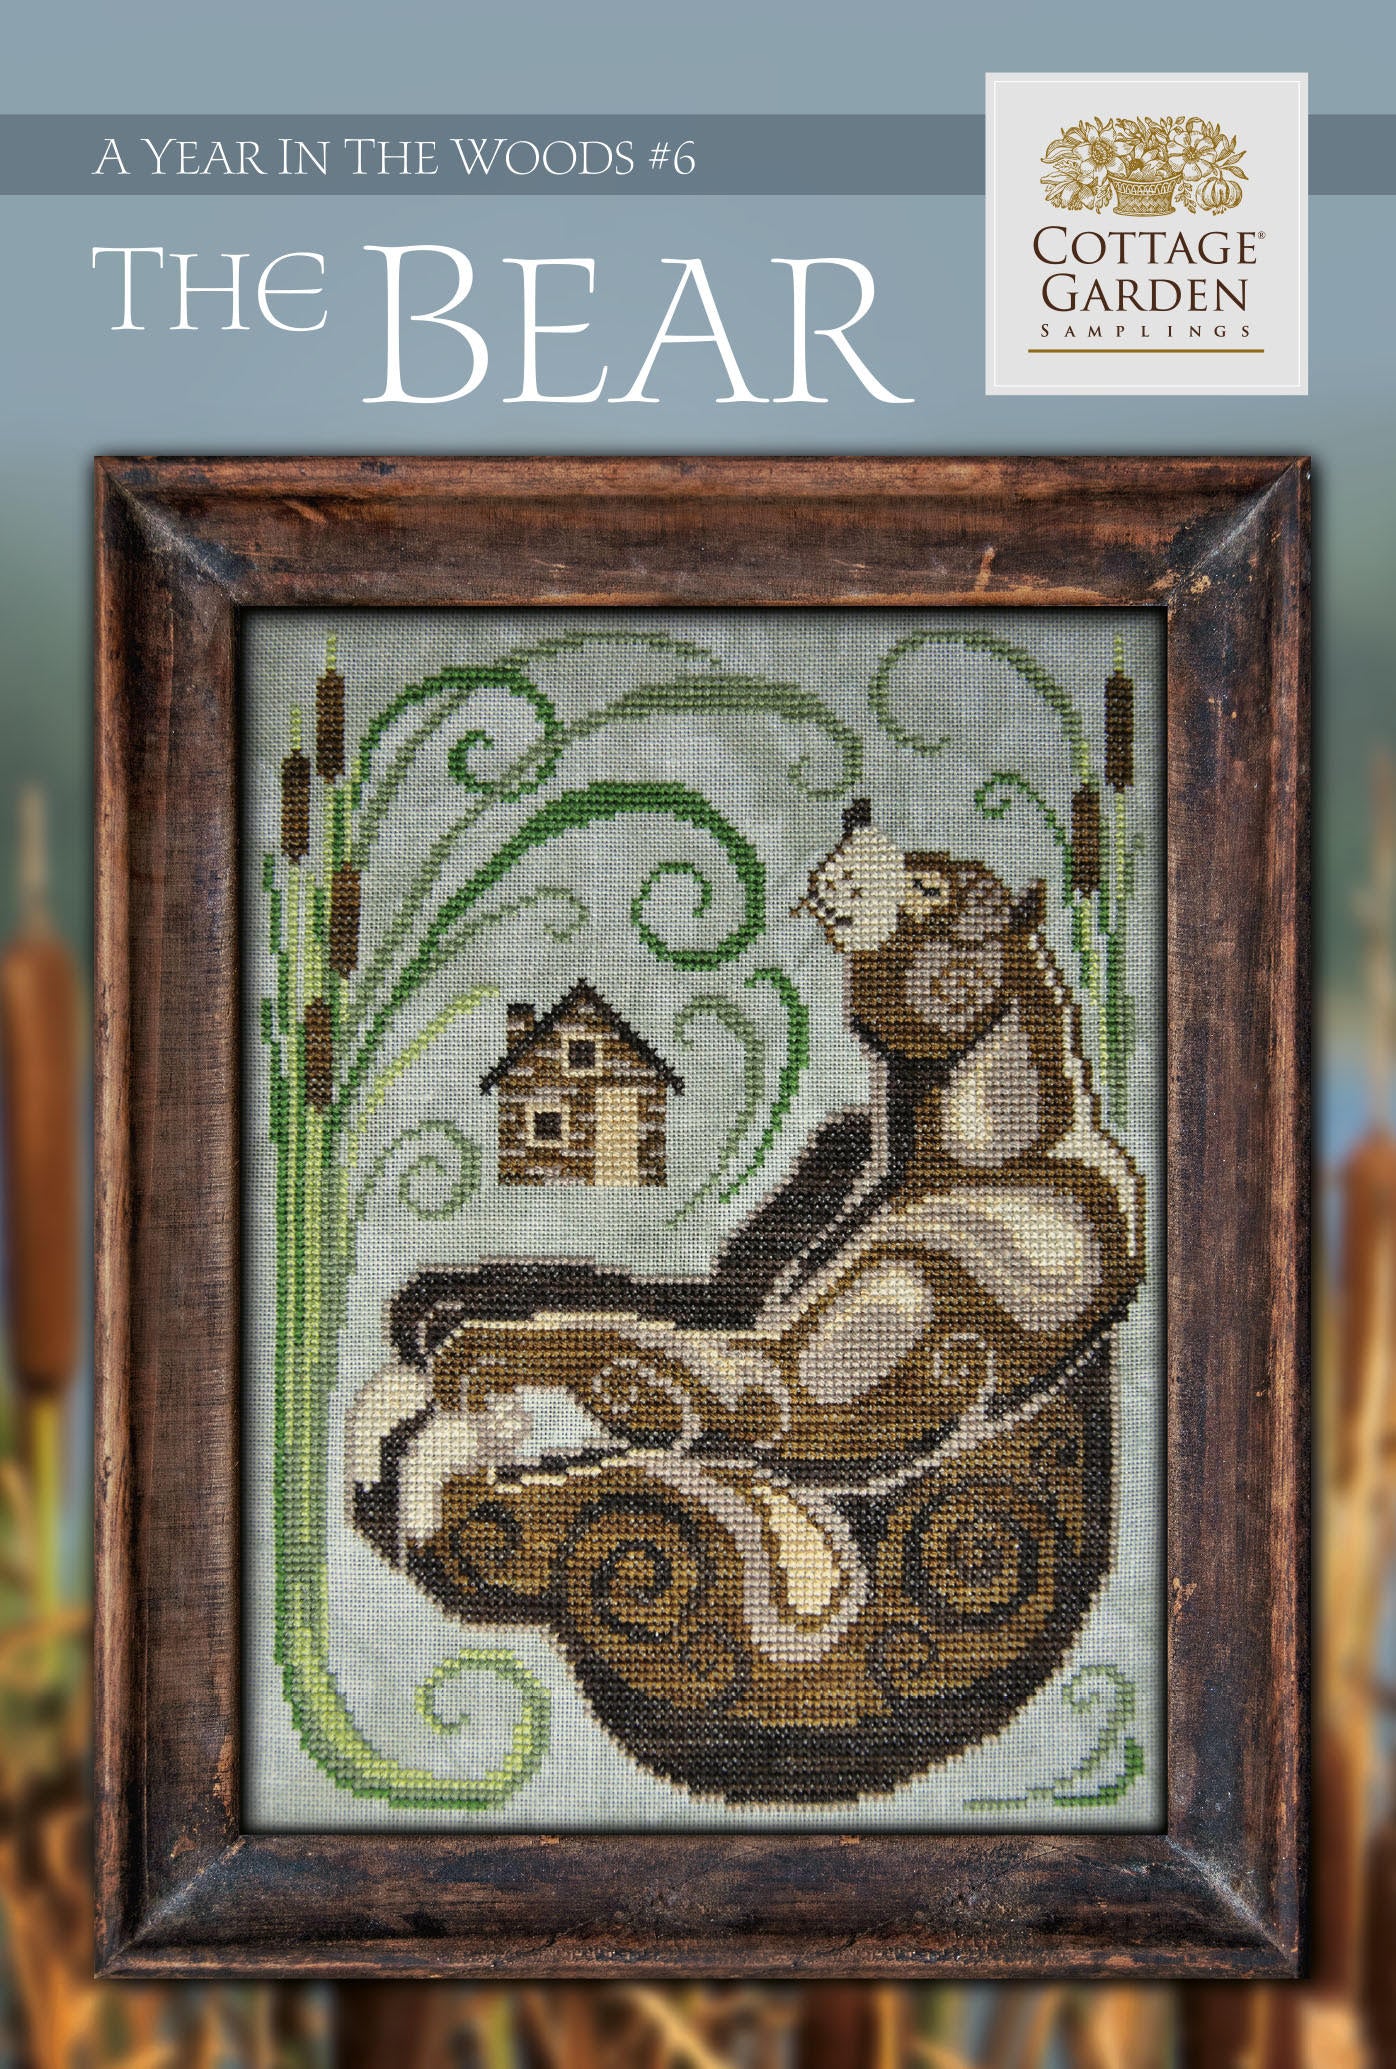 The Bear by Cottage Garden Samplings